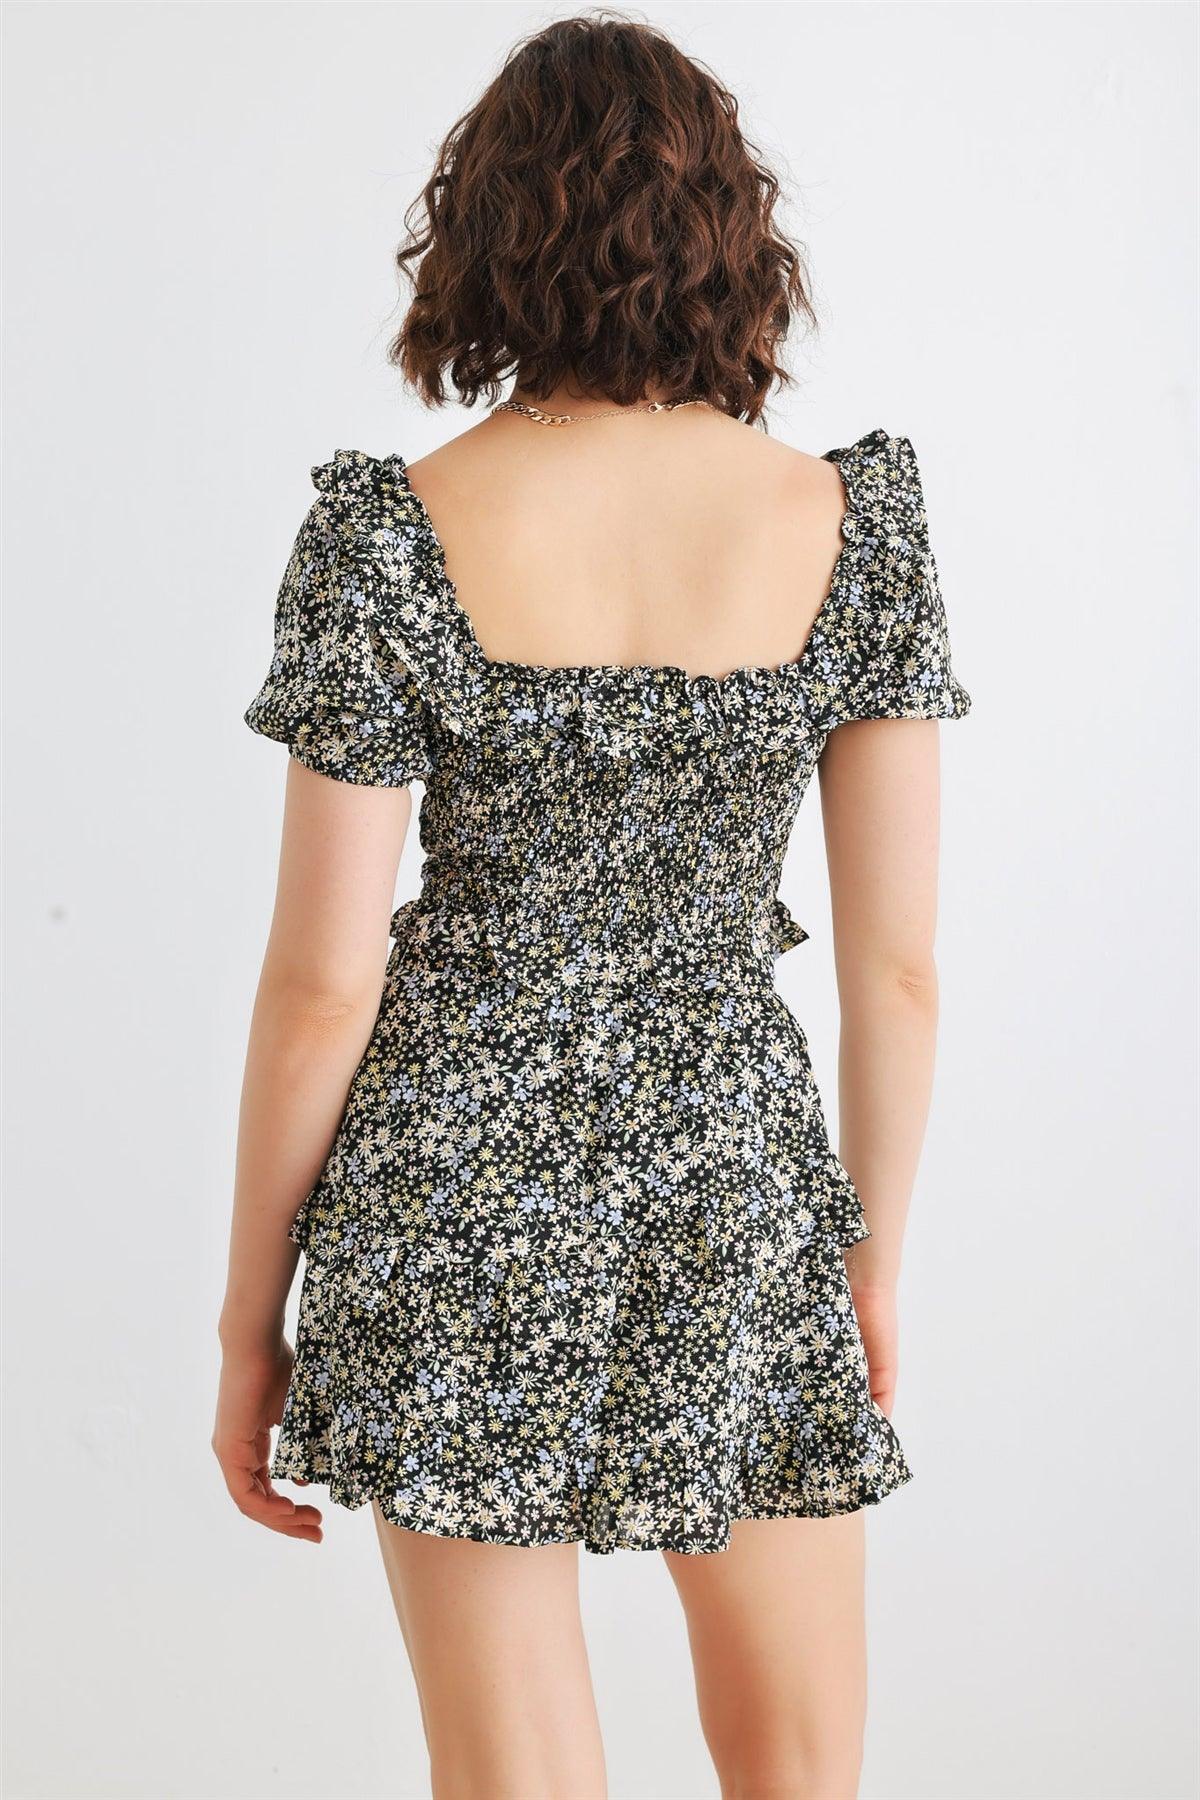 Black Multi Floral Smocked Collared Neck Short Sleeve Crop Top & High Waist Tiered Skirt Set /3-2-1